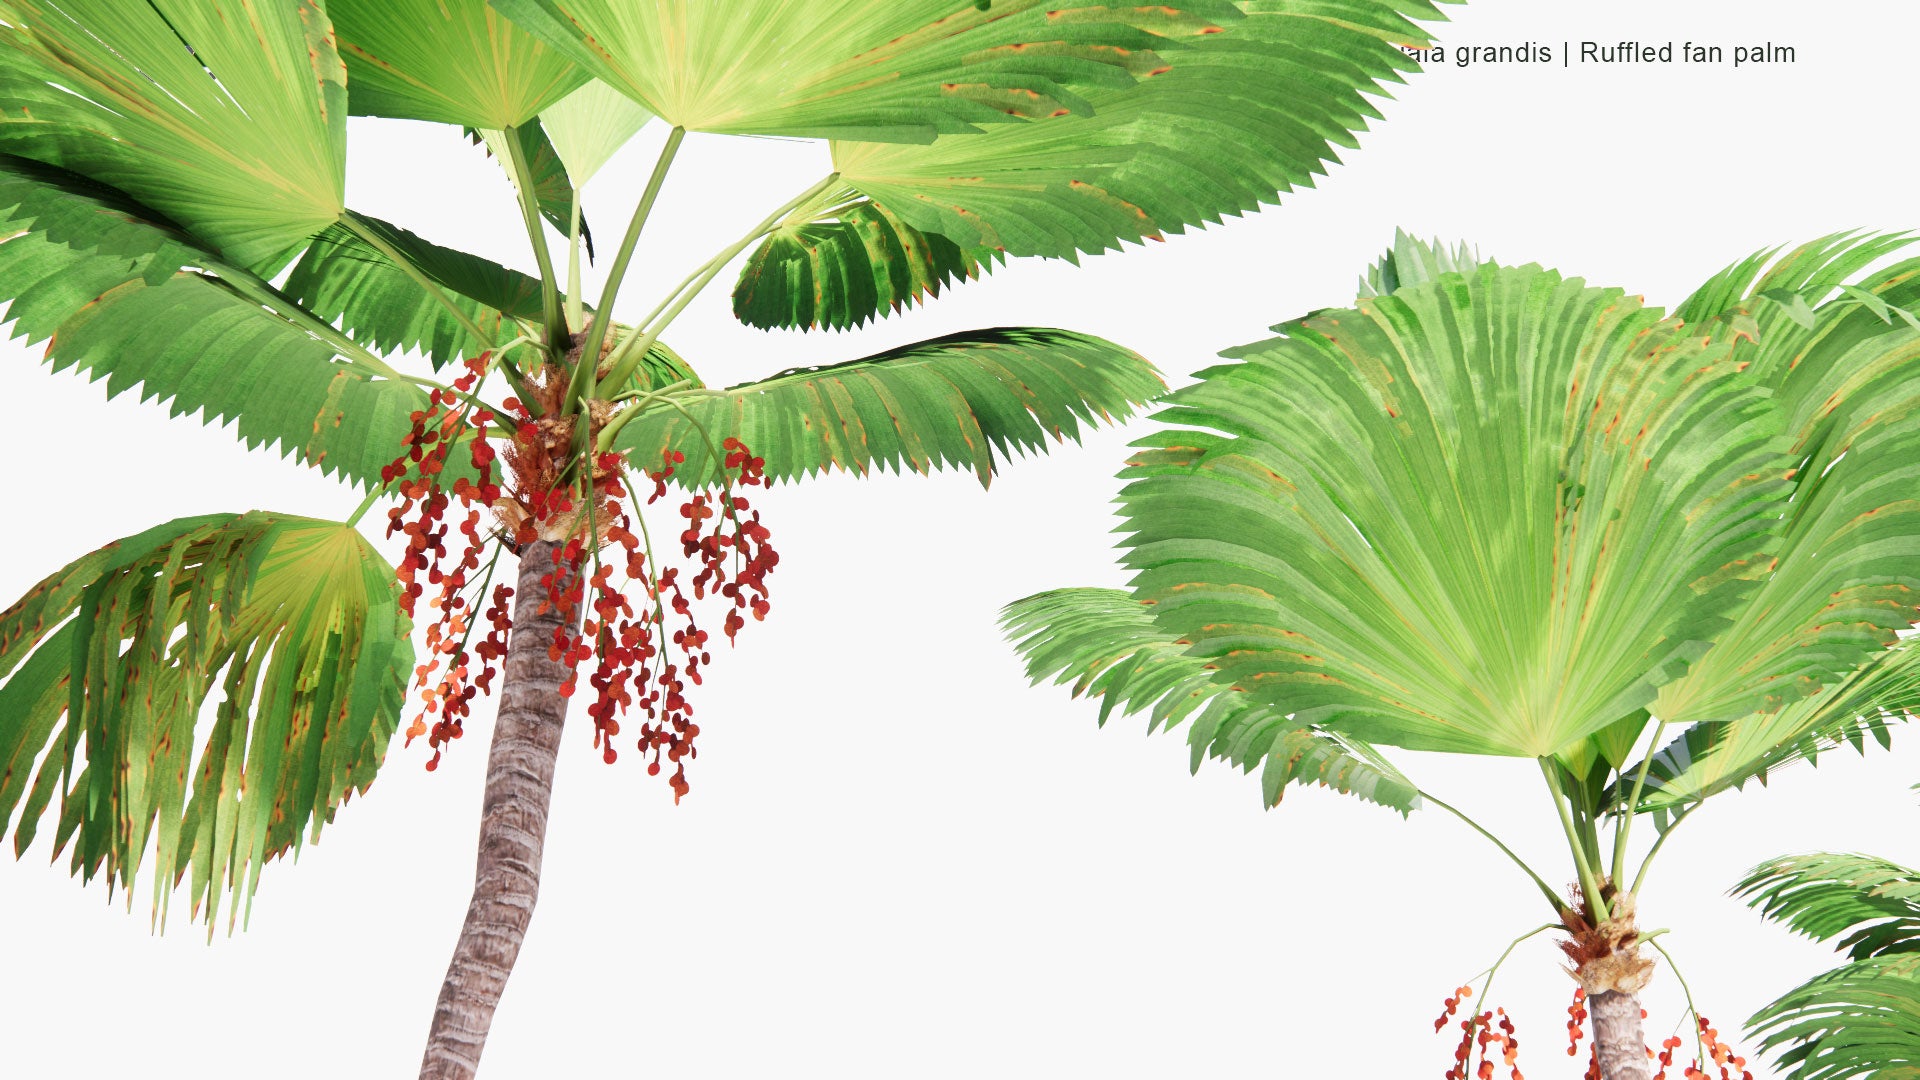 Low Poly Licuala Grandis - Ruffled Fan Palm, Vanuatu Fan Palm, Palas Palm (3D Model)